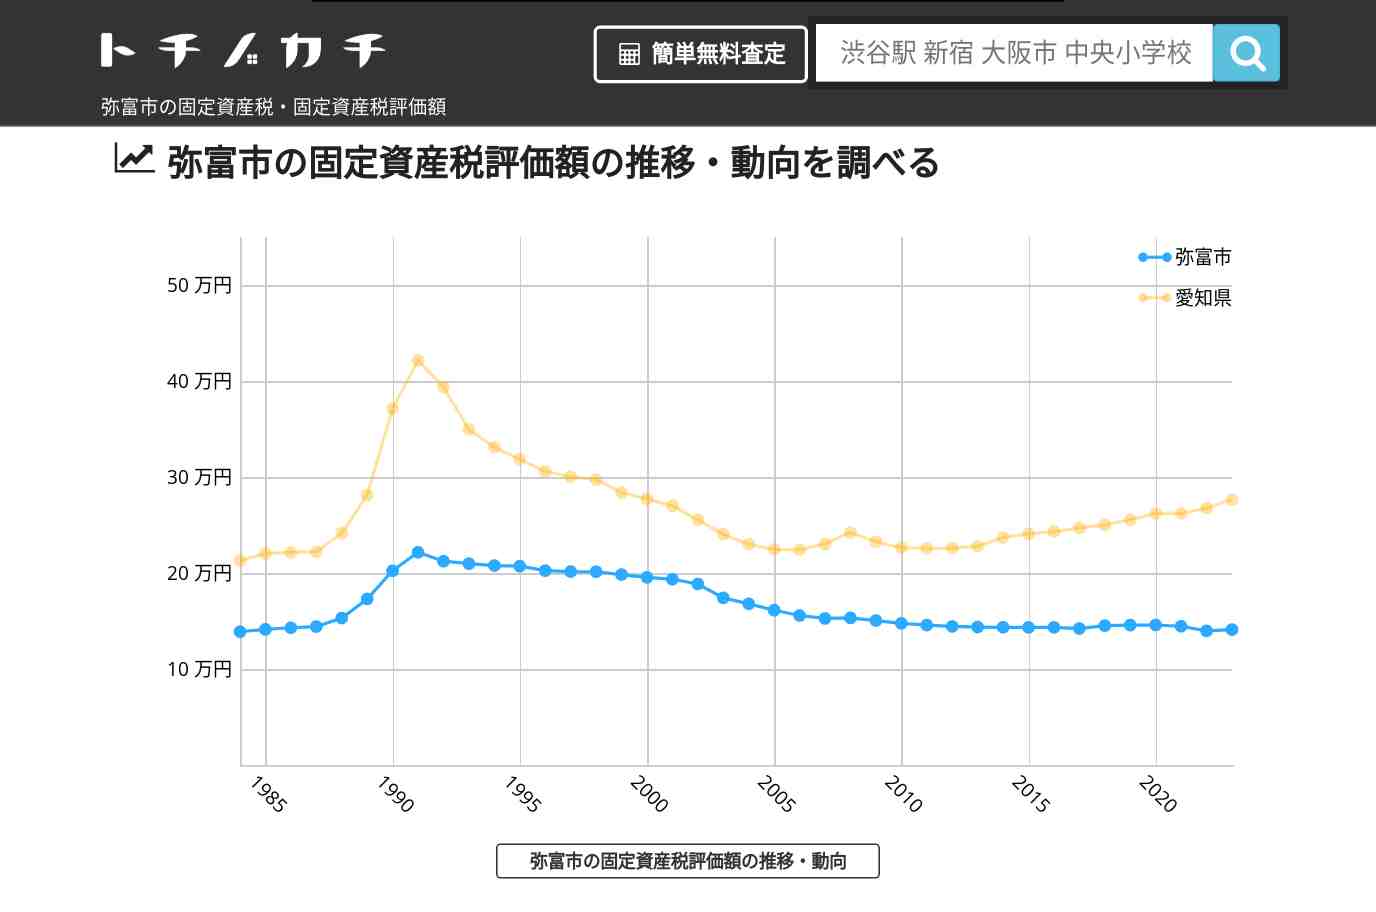 栄南小学校(愛知県 弥富市)周辺の固定資産税・固定資産税評価額 | トチノカチ